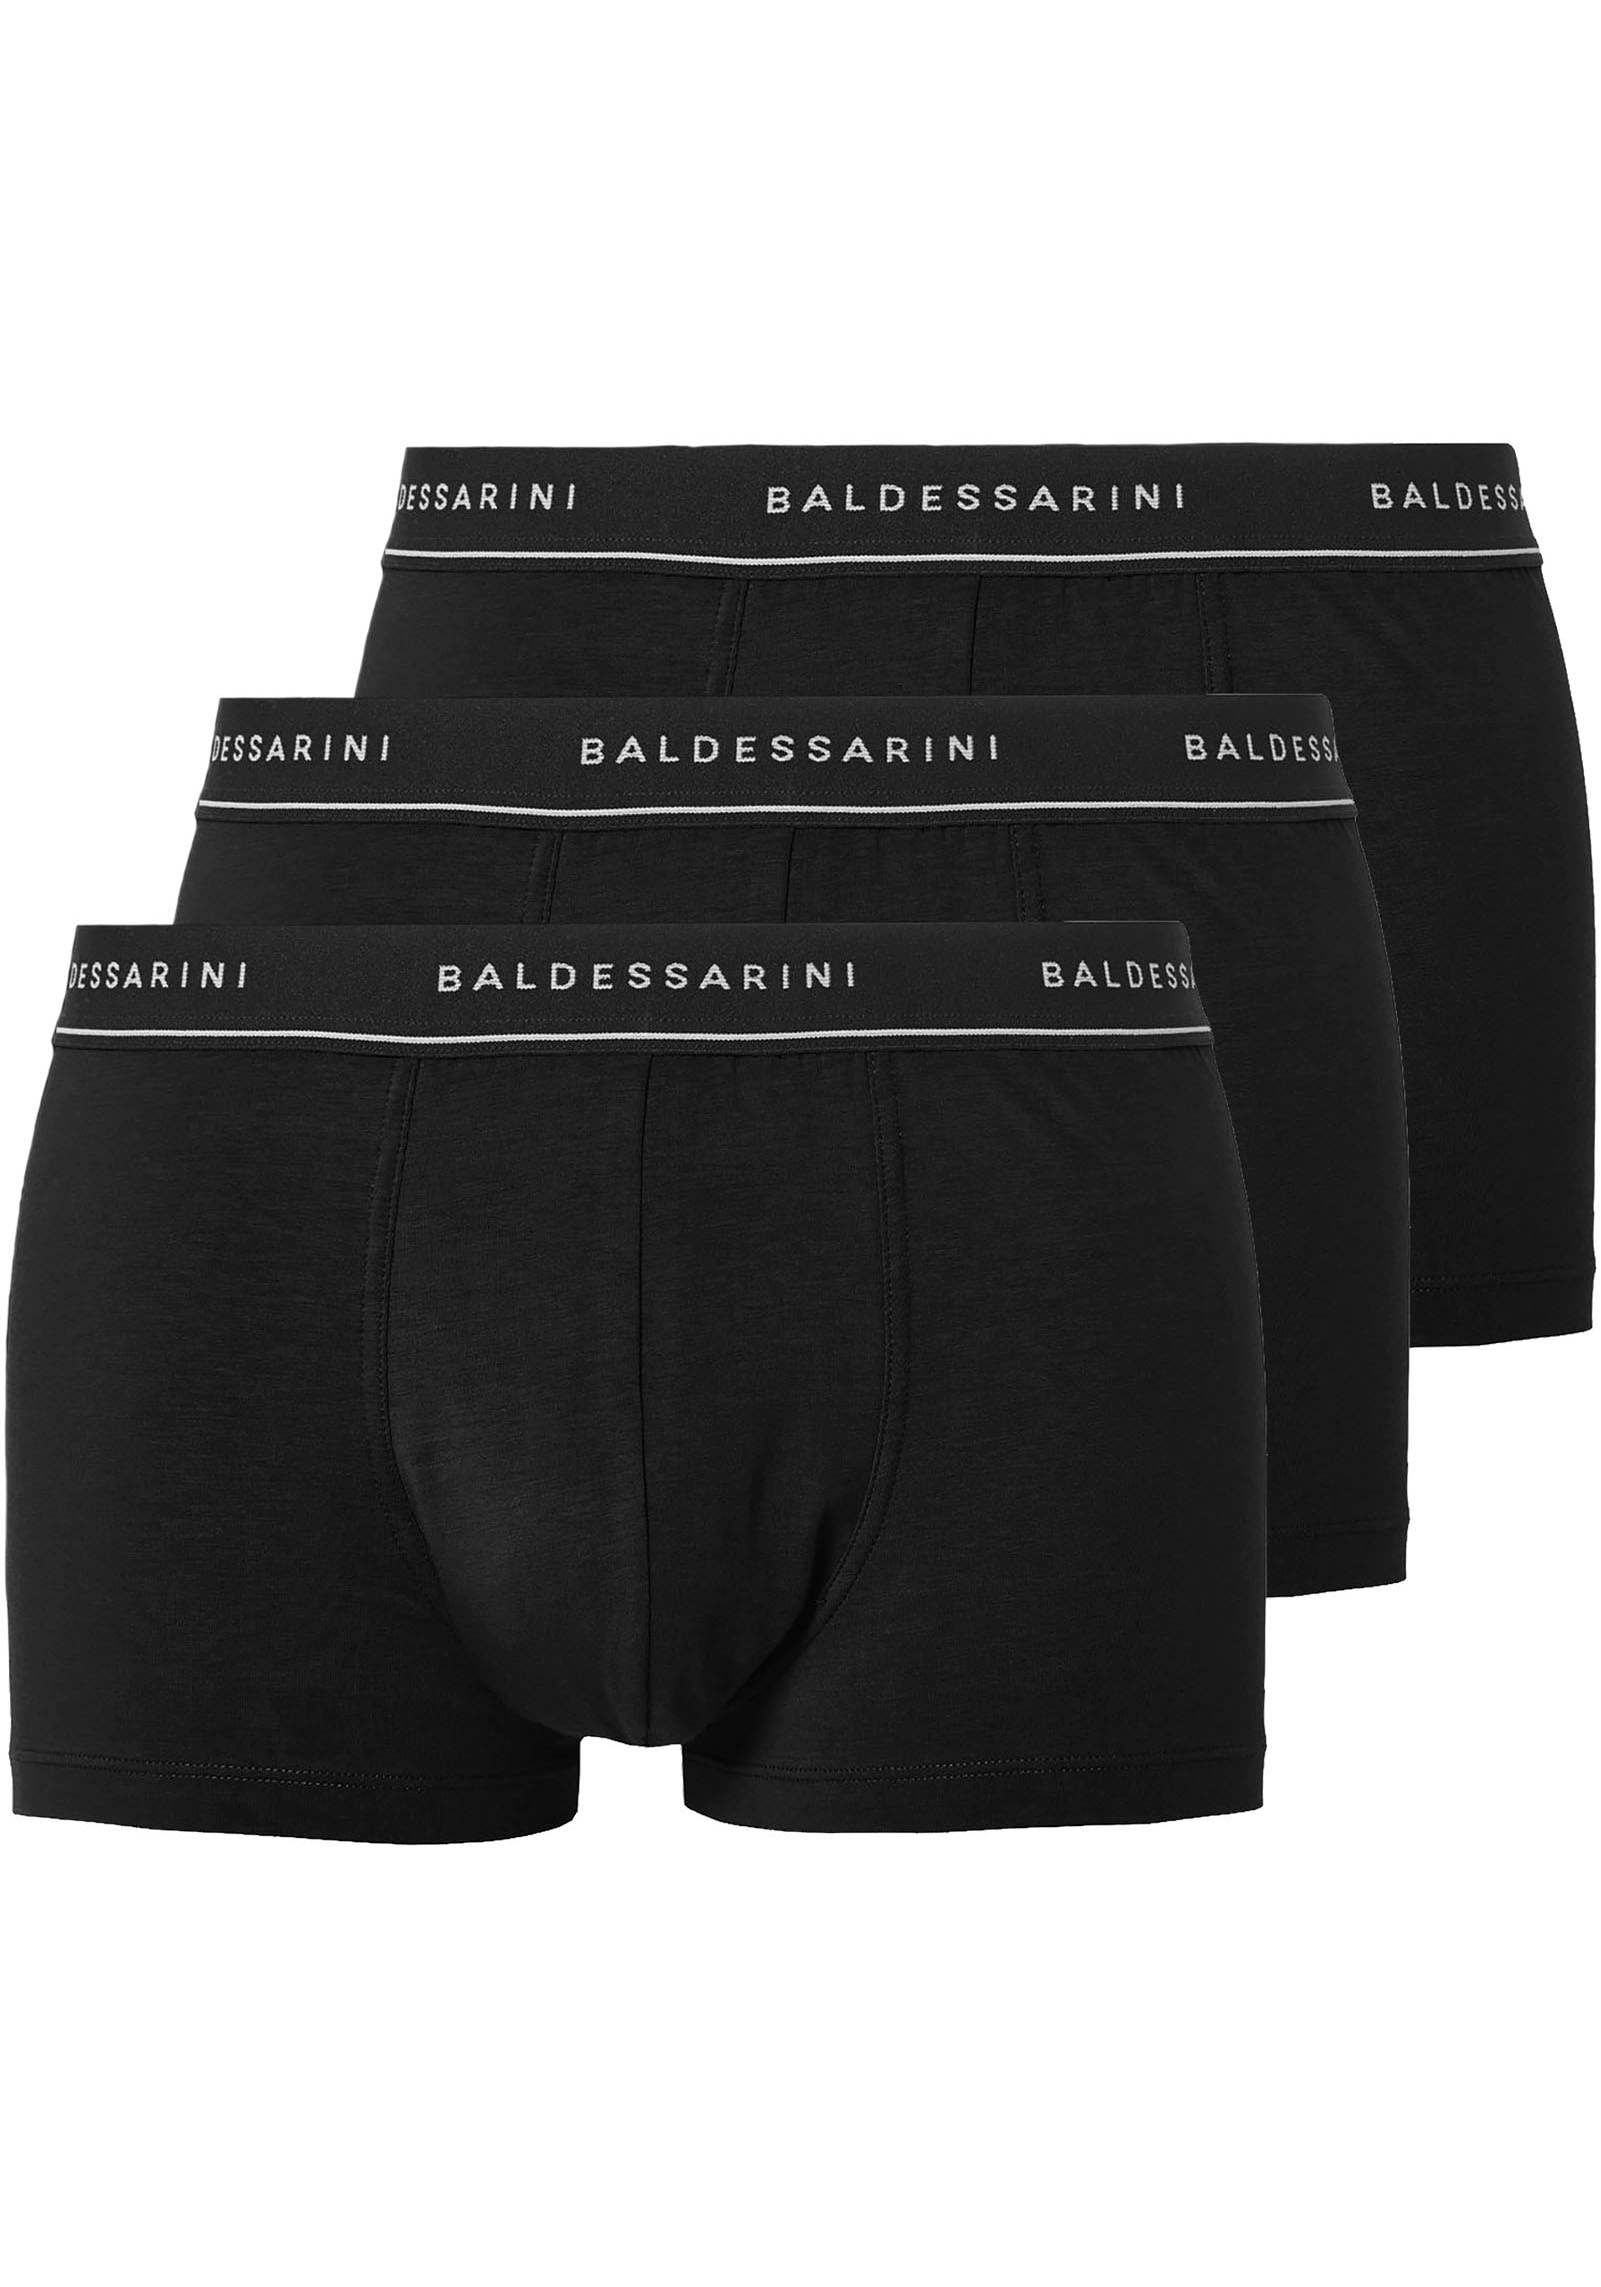 Baldessarini Herren Short-Pants, Baumwolle, Elastan, Single Jersey, grau, Melange, 3er Pack 5